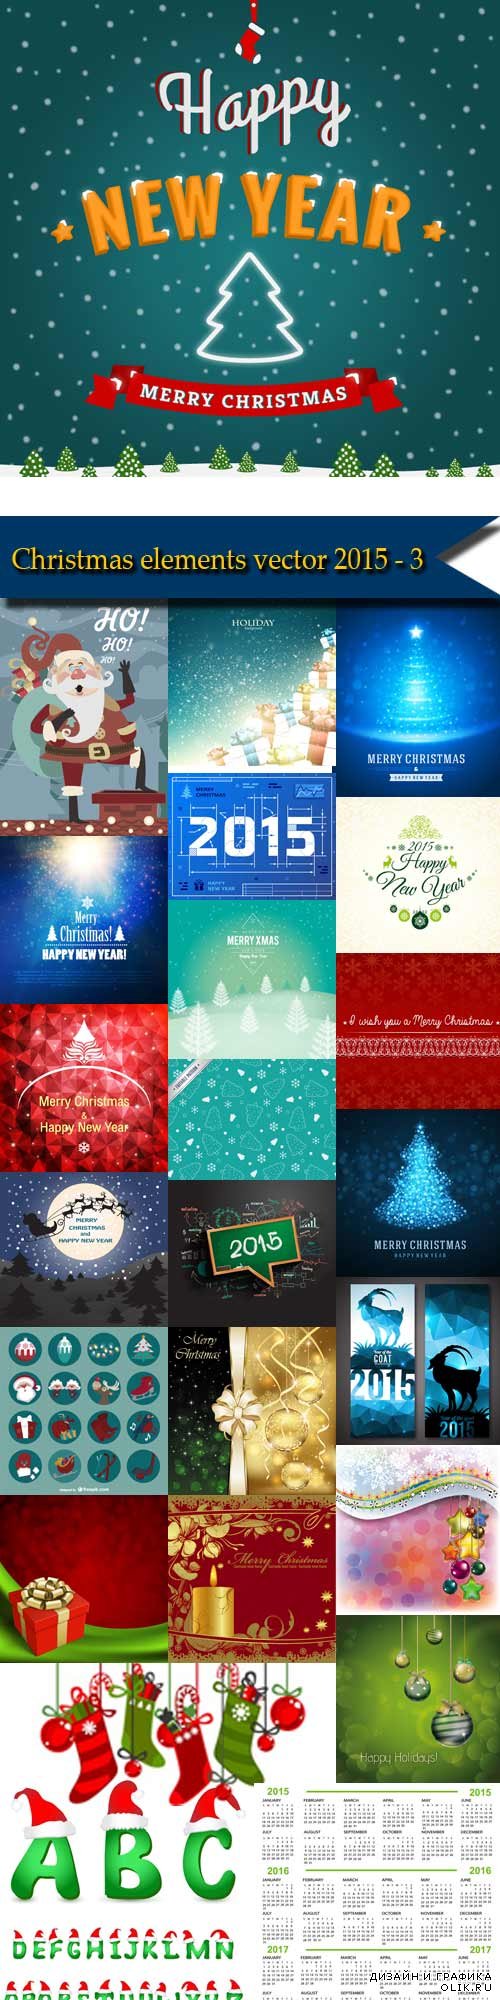 Christmas elements vector 2015 - 3